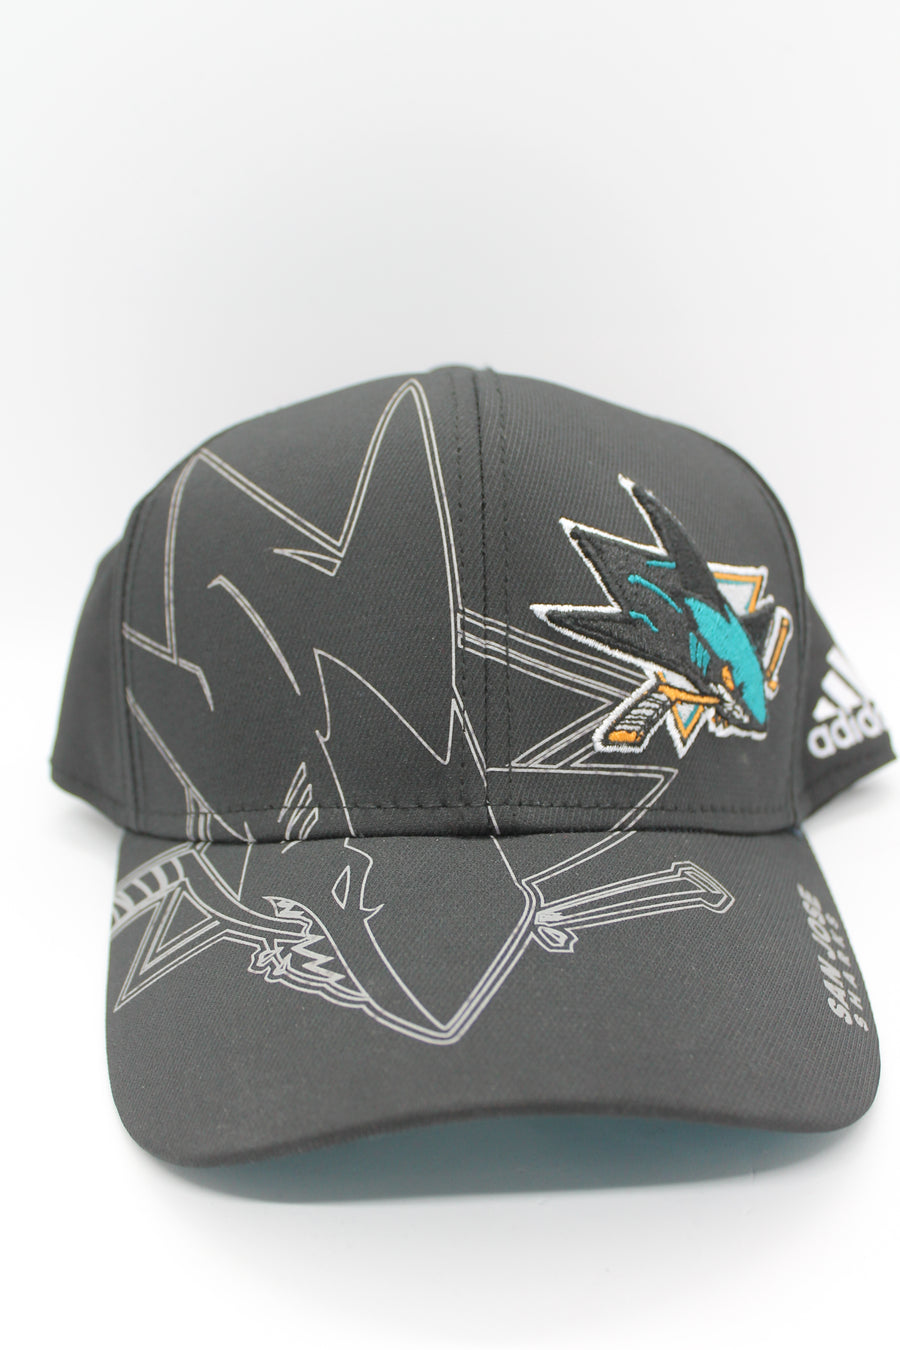 NHL San Jose Sharks Adidas Authentic Pro Collection Flex Hat